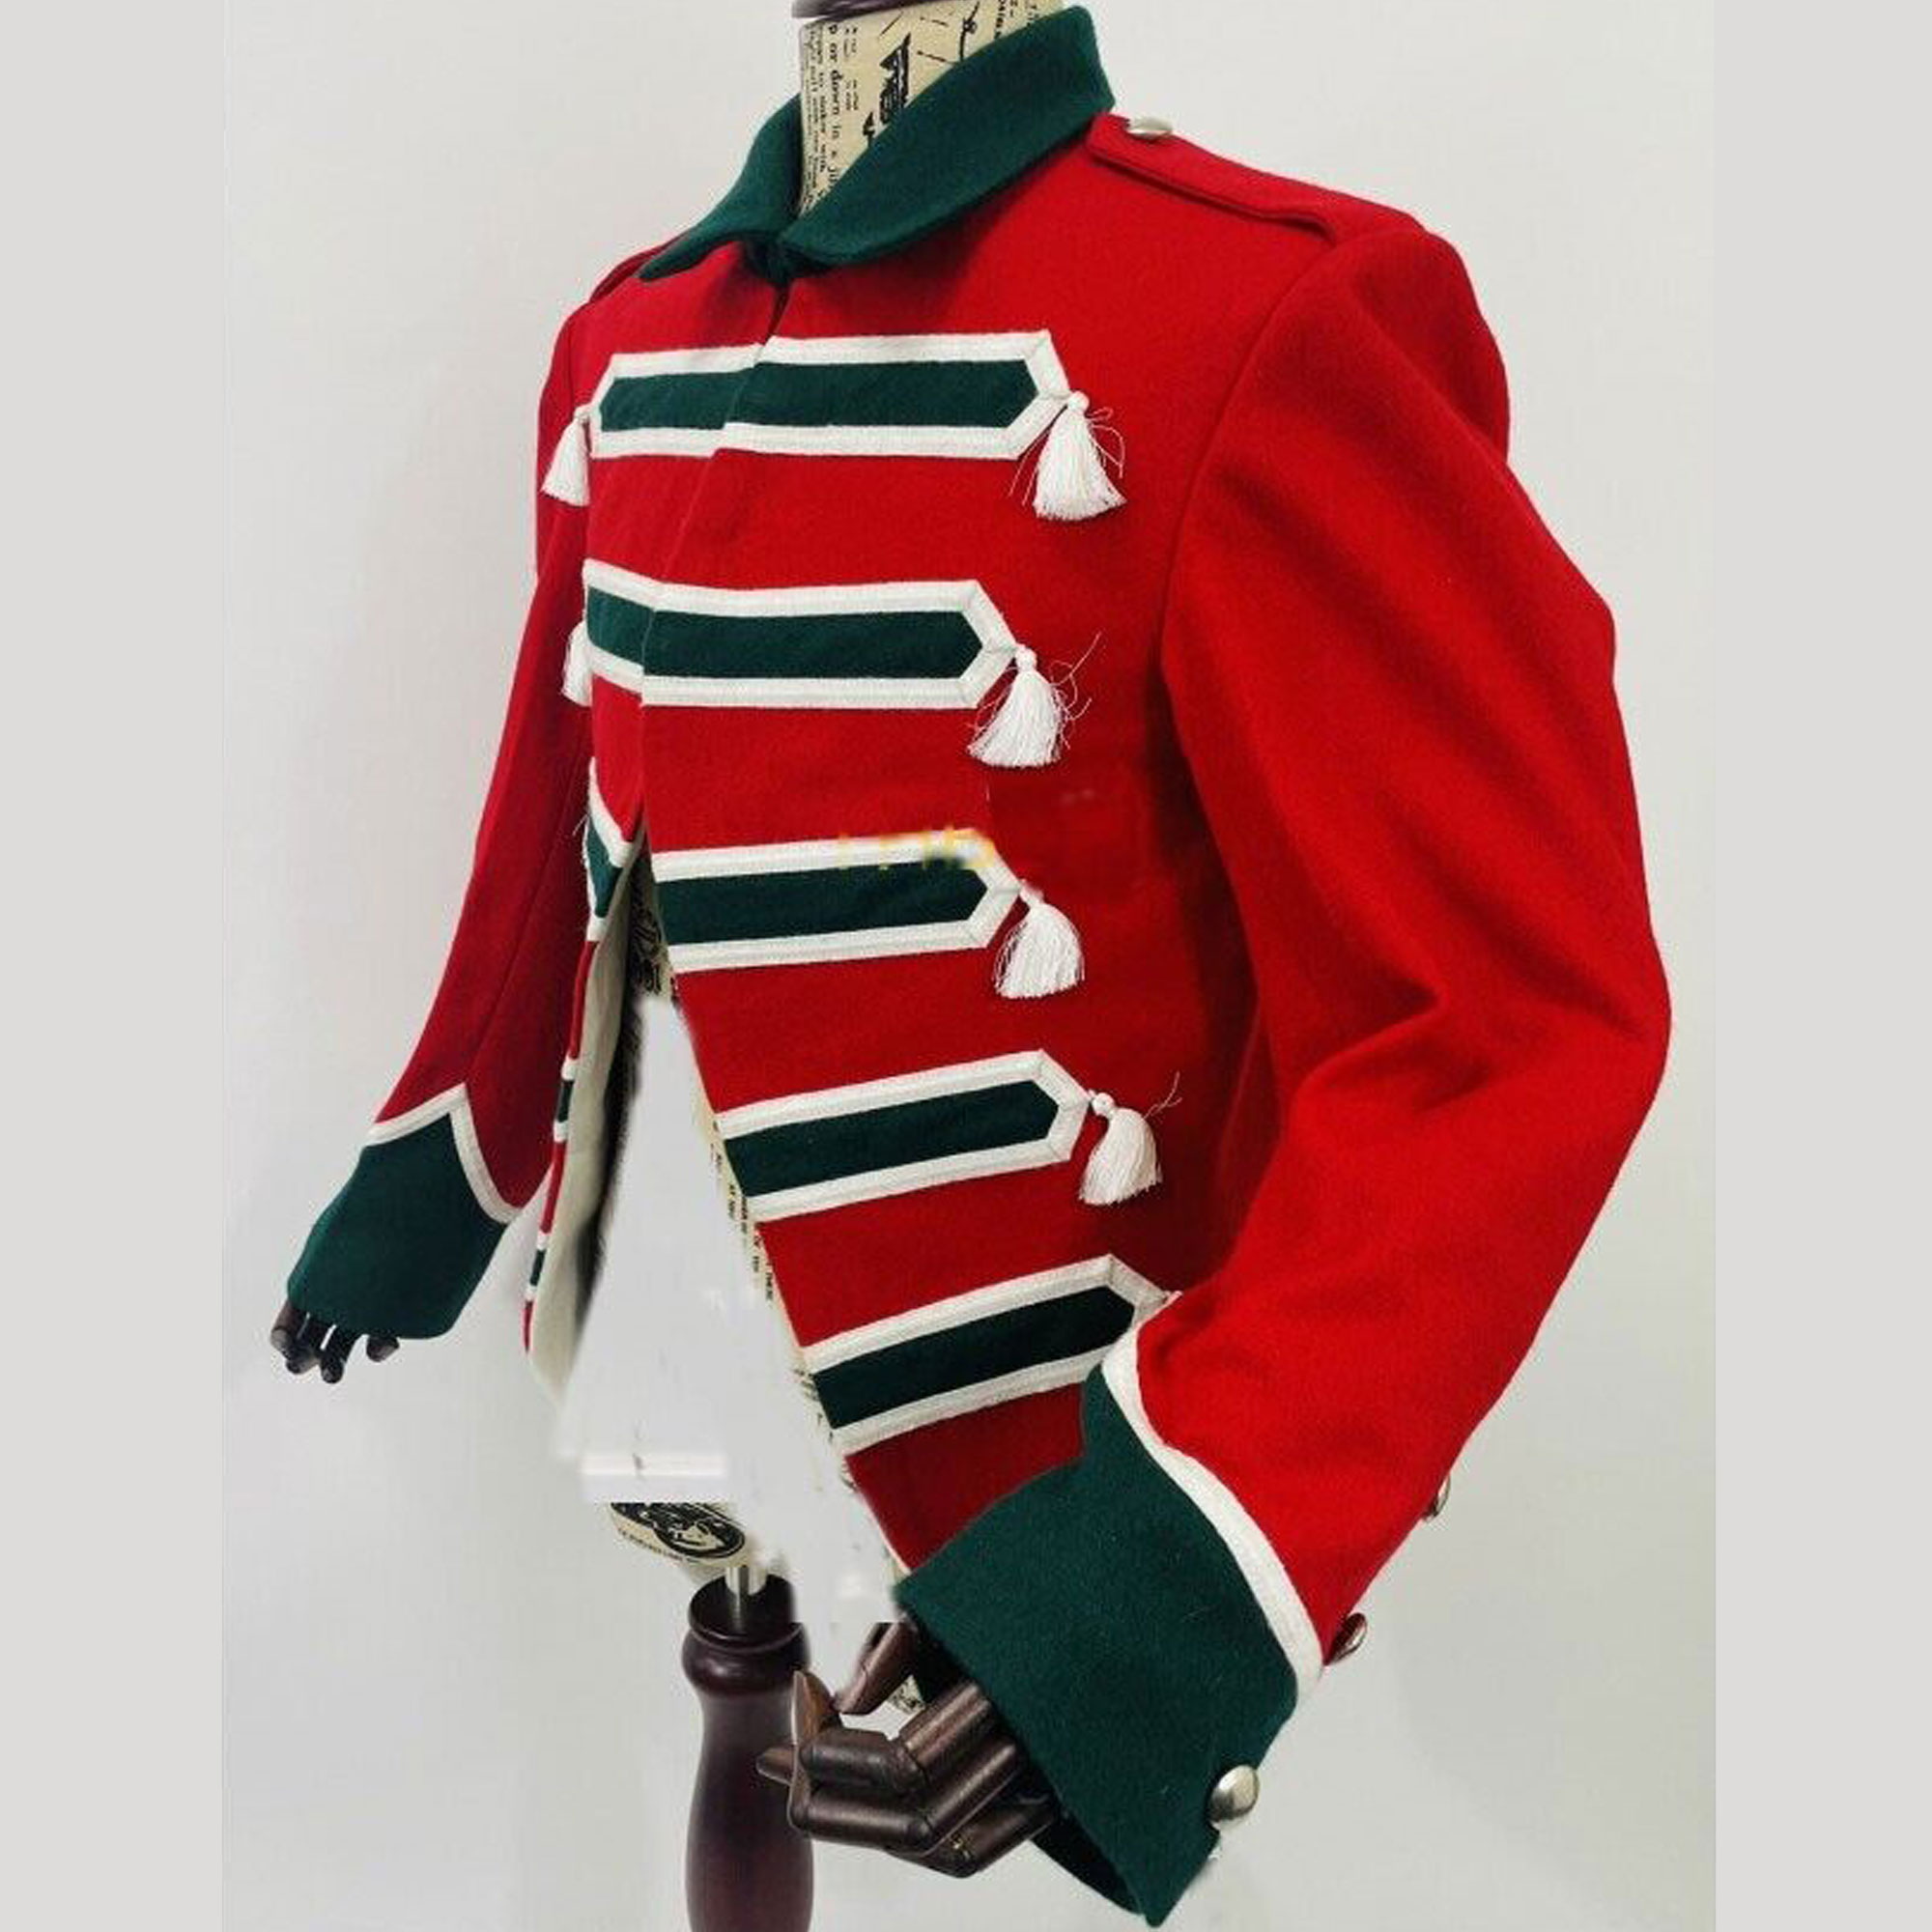 New 1776s 105th Regiment Of Foot Volunteers Of Ireland Red Wool Jacket